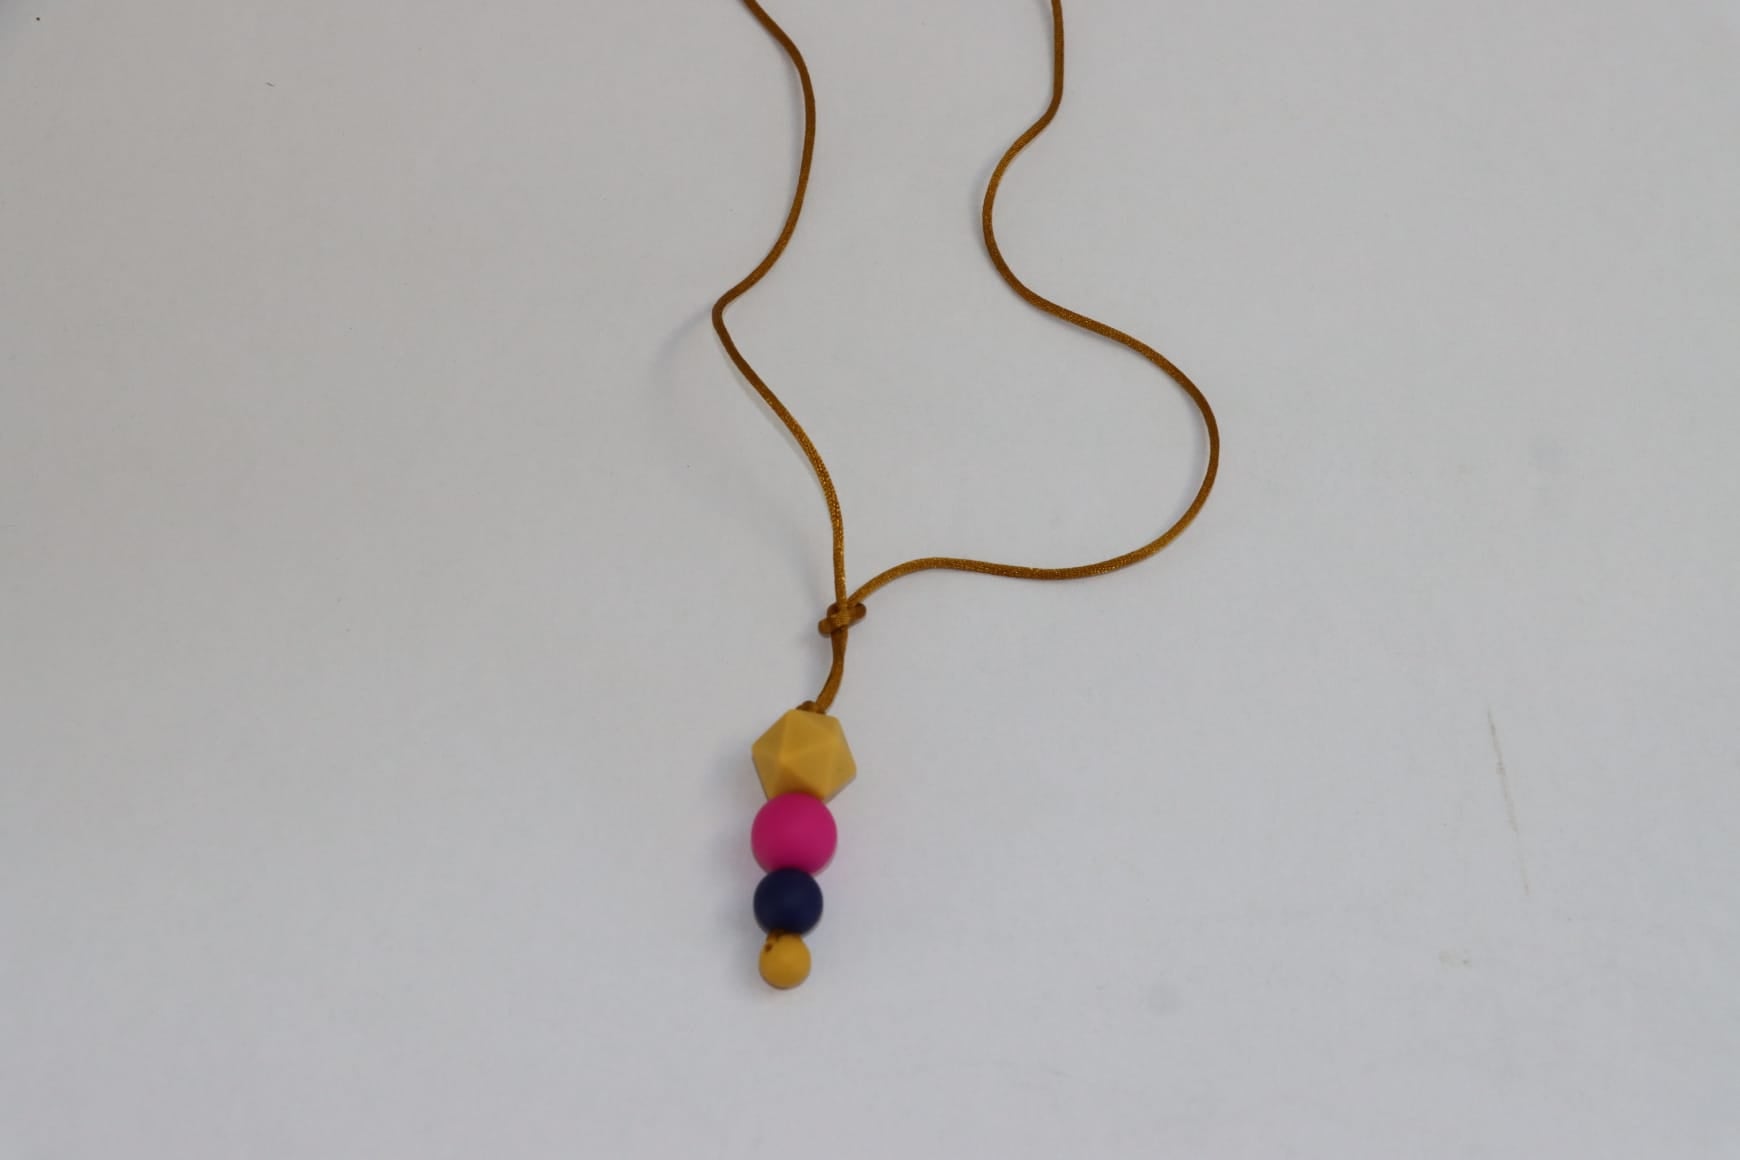 Breastfeeding Necklace handmade in Dublin